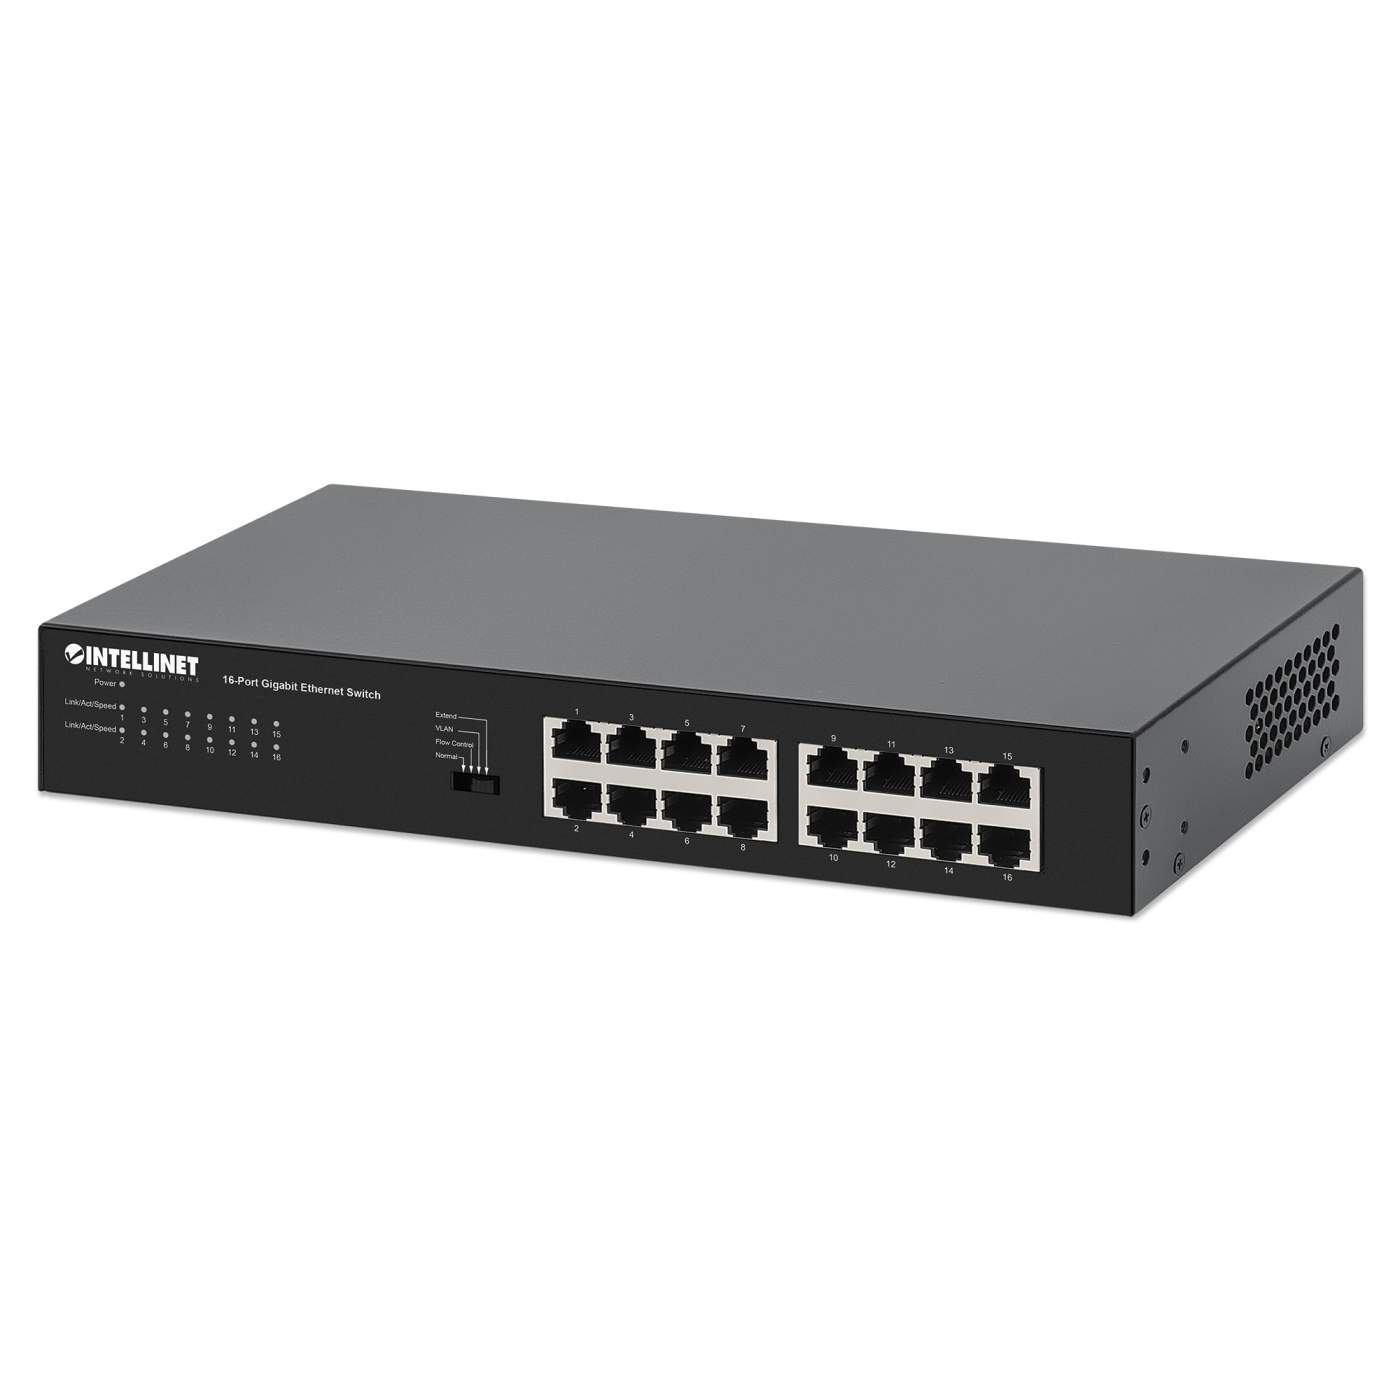 Intellinet 561815 16-Port Gigabit Ethernet Switch